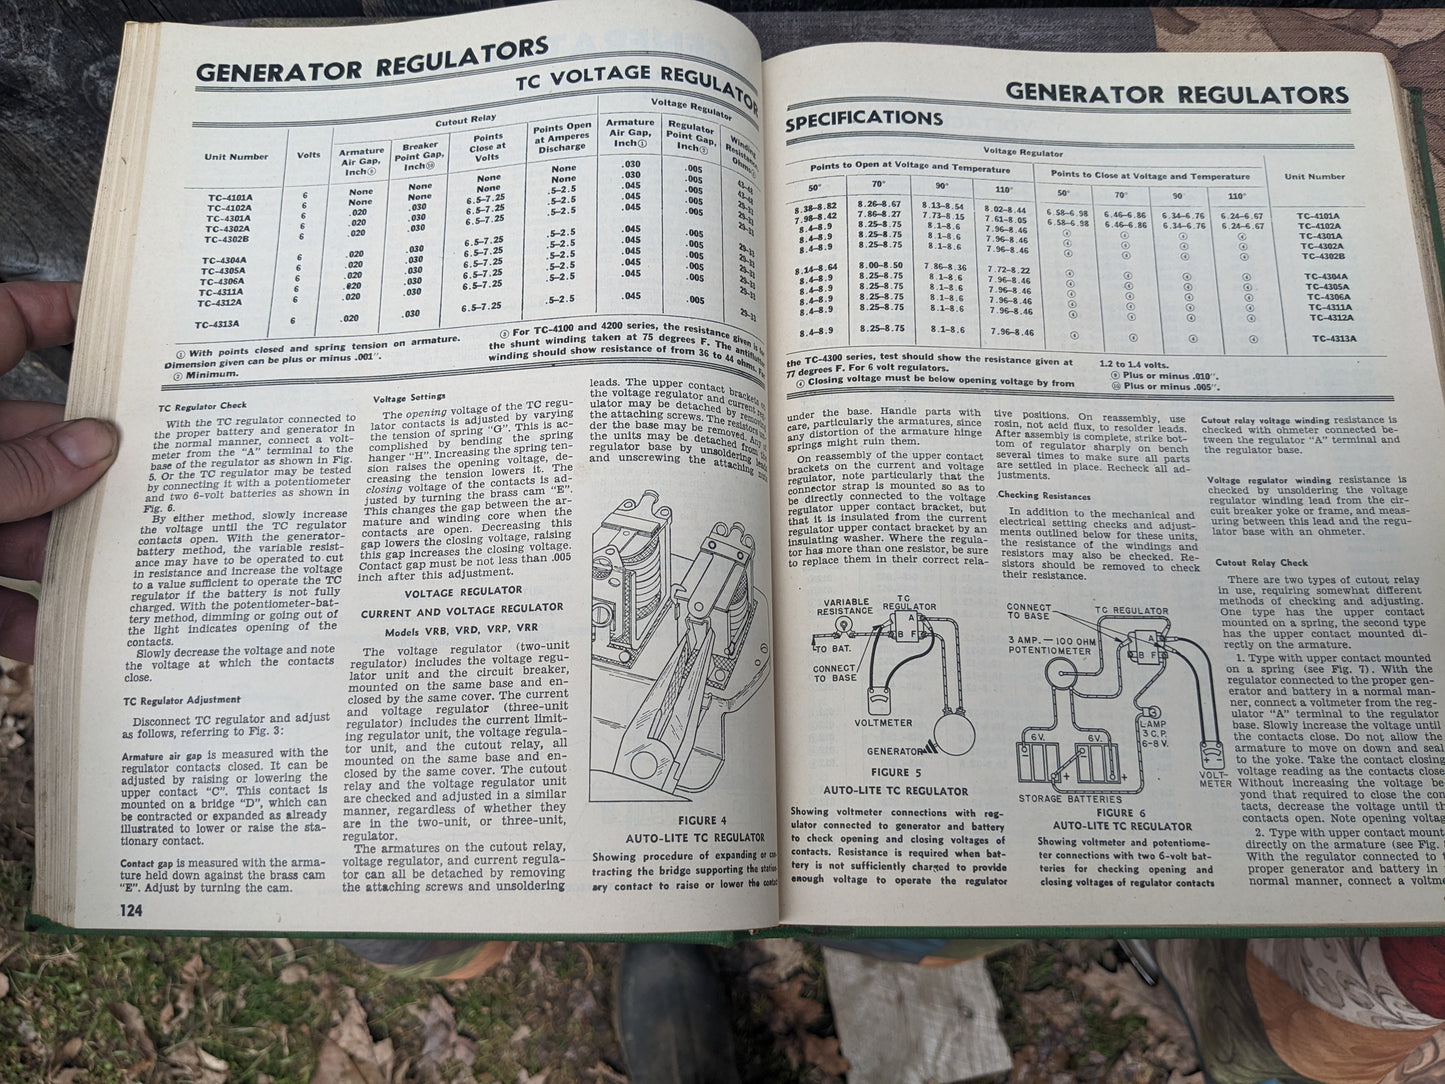 Motor's Auto Repair Manual, Eighth Edition, 1944